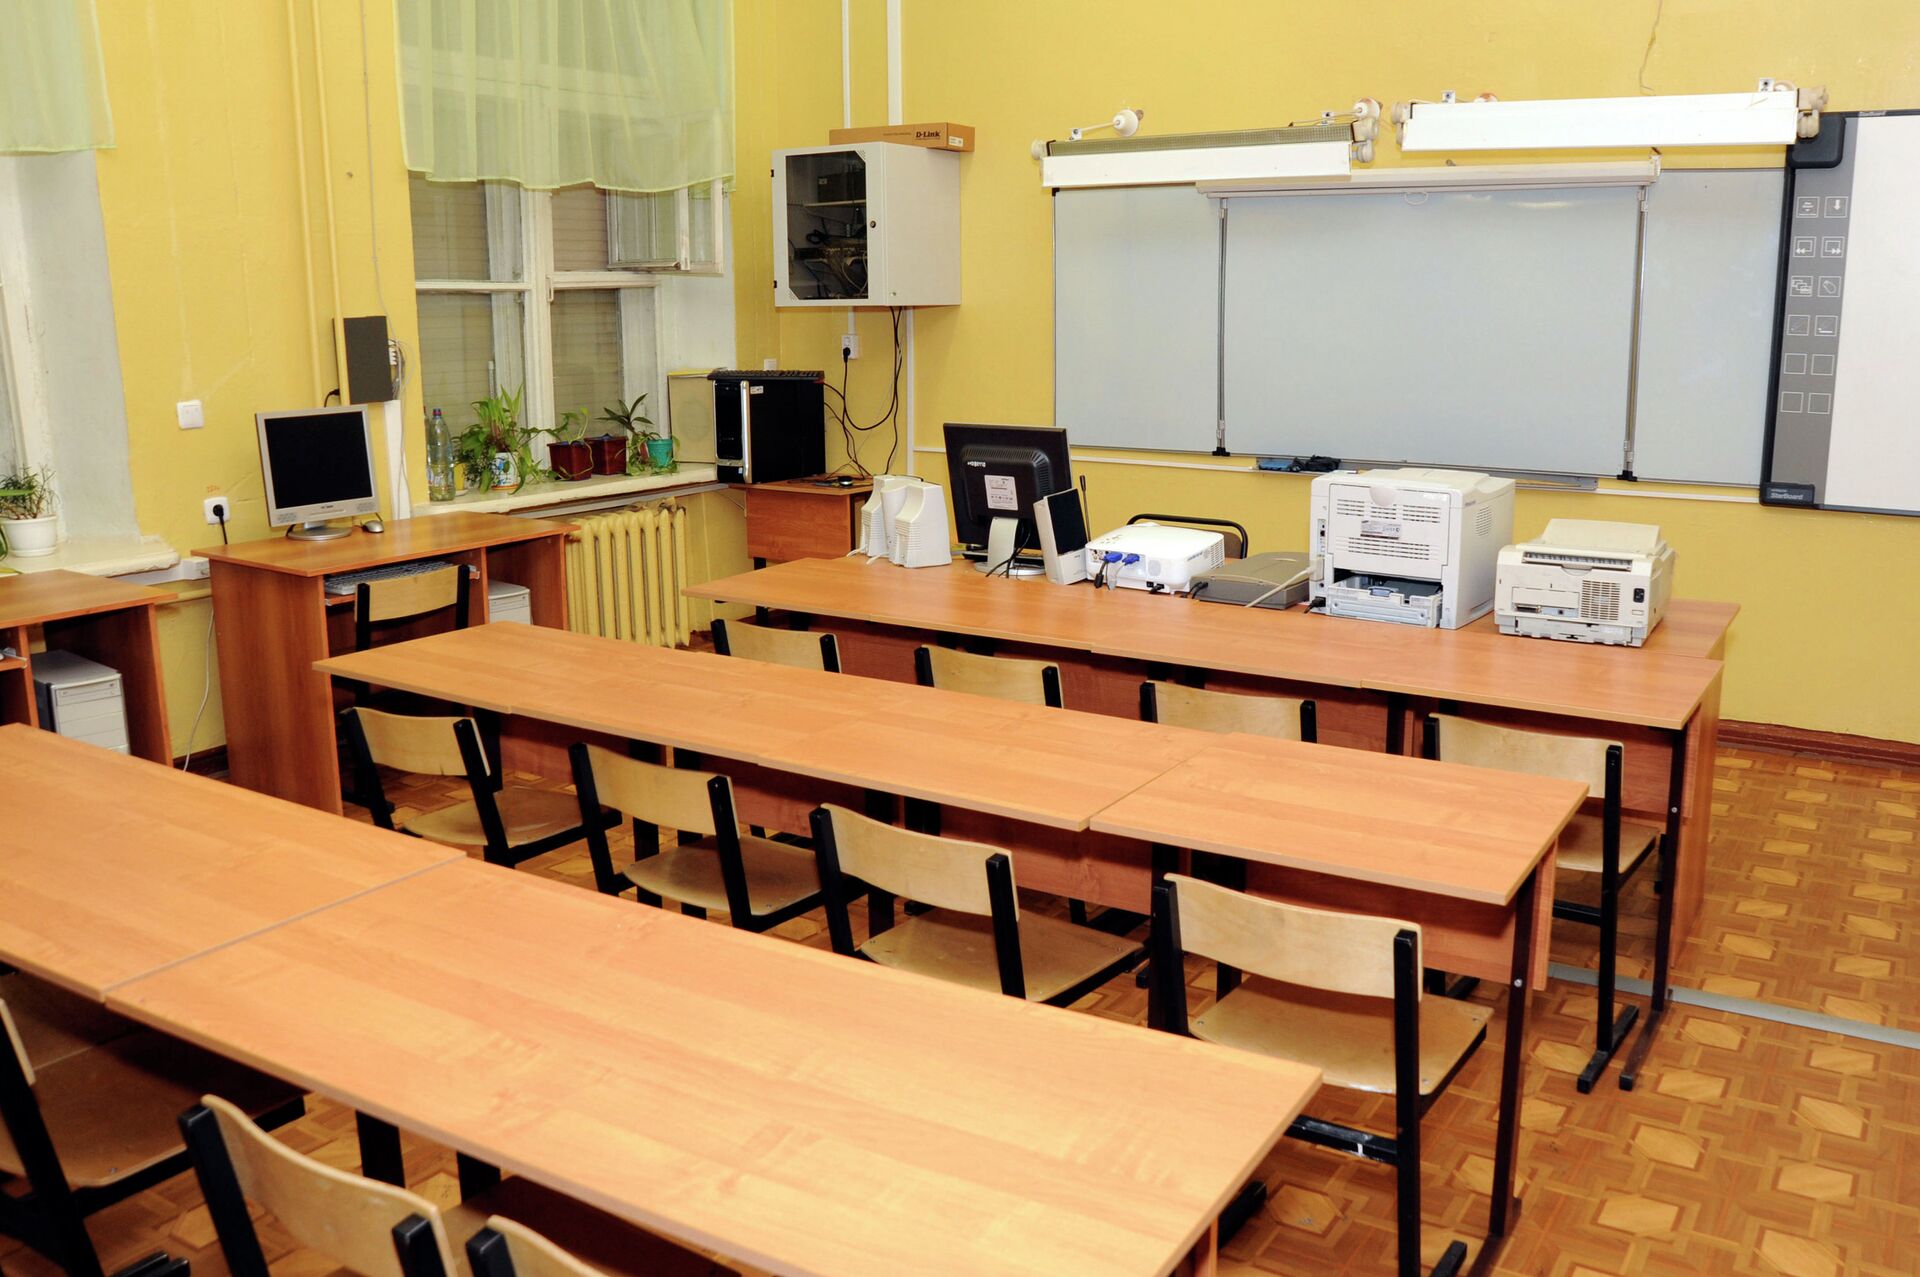 Средняя школа поселка Мурмаши Мурманской области закрыта на карантин - РИА Новости, 1920, 22.10.2020